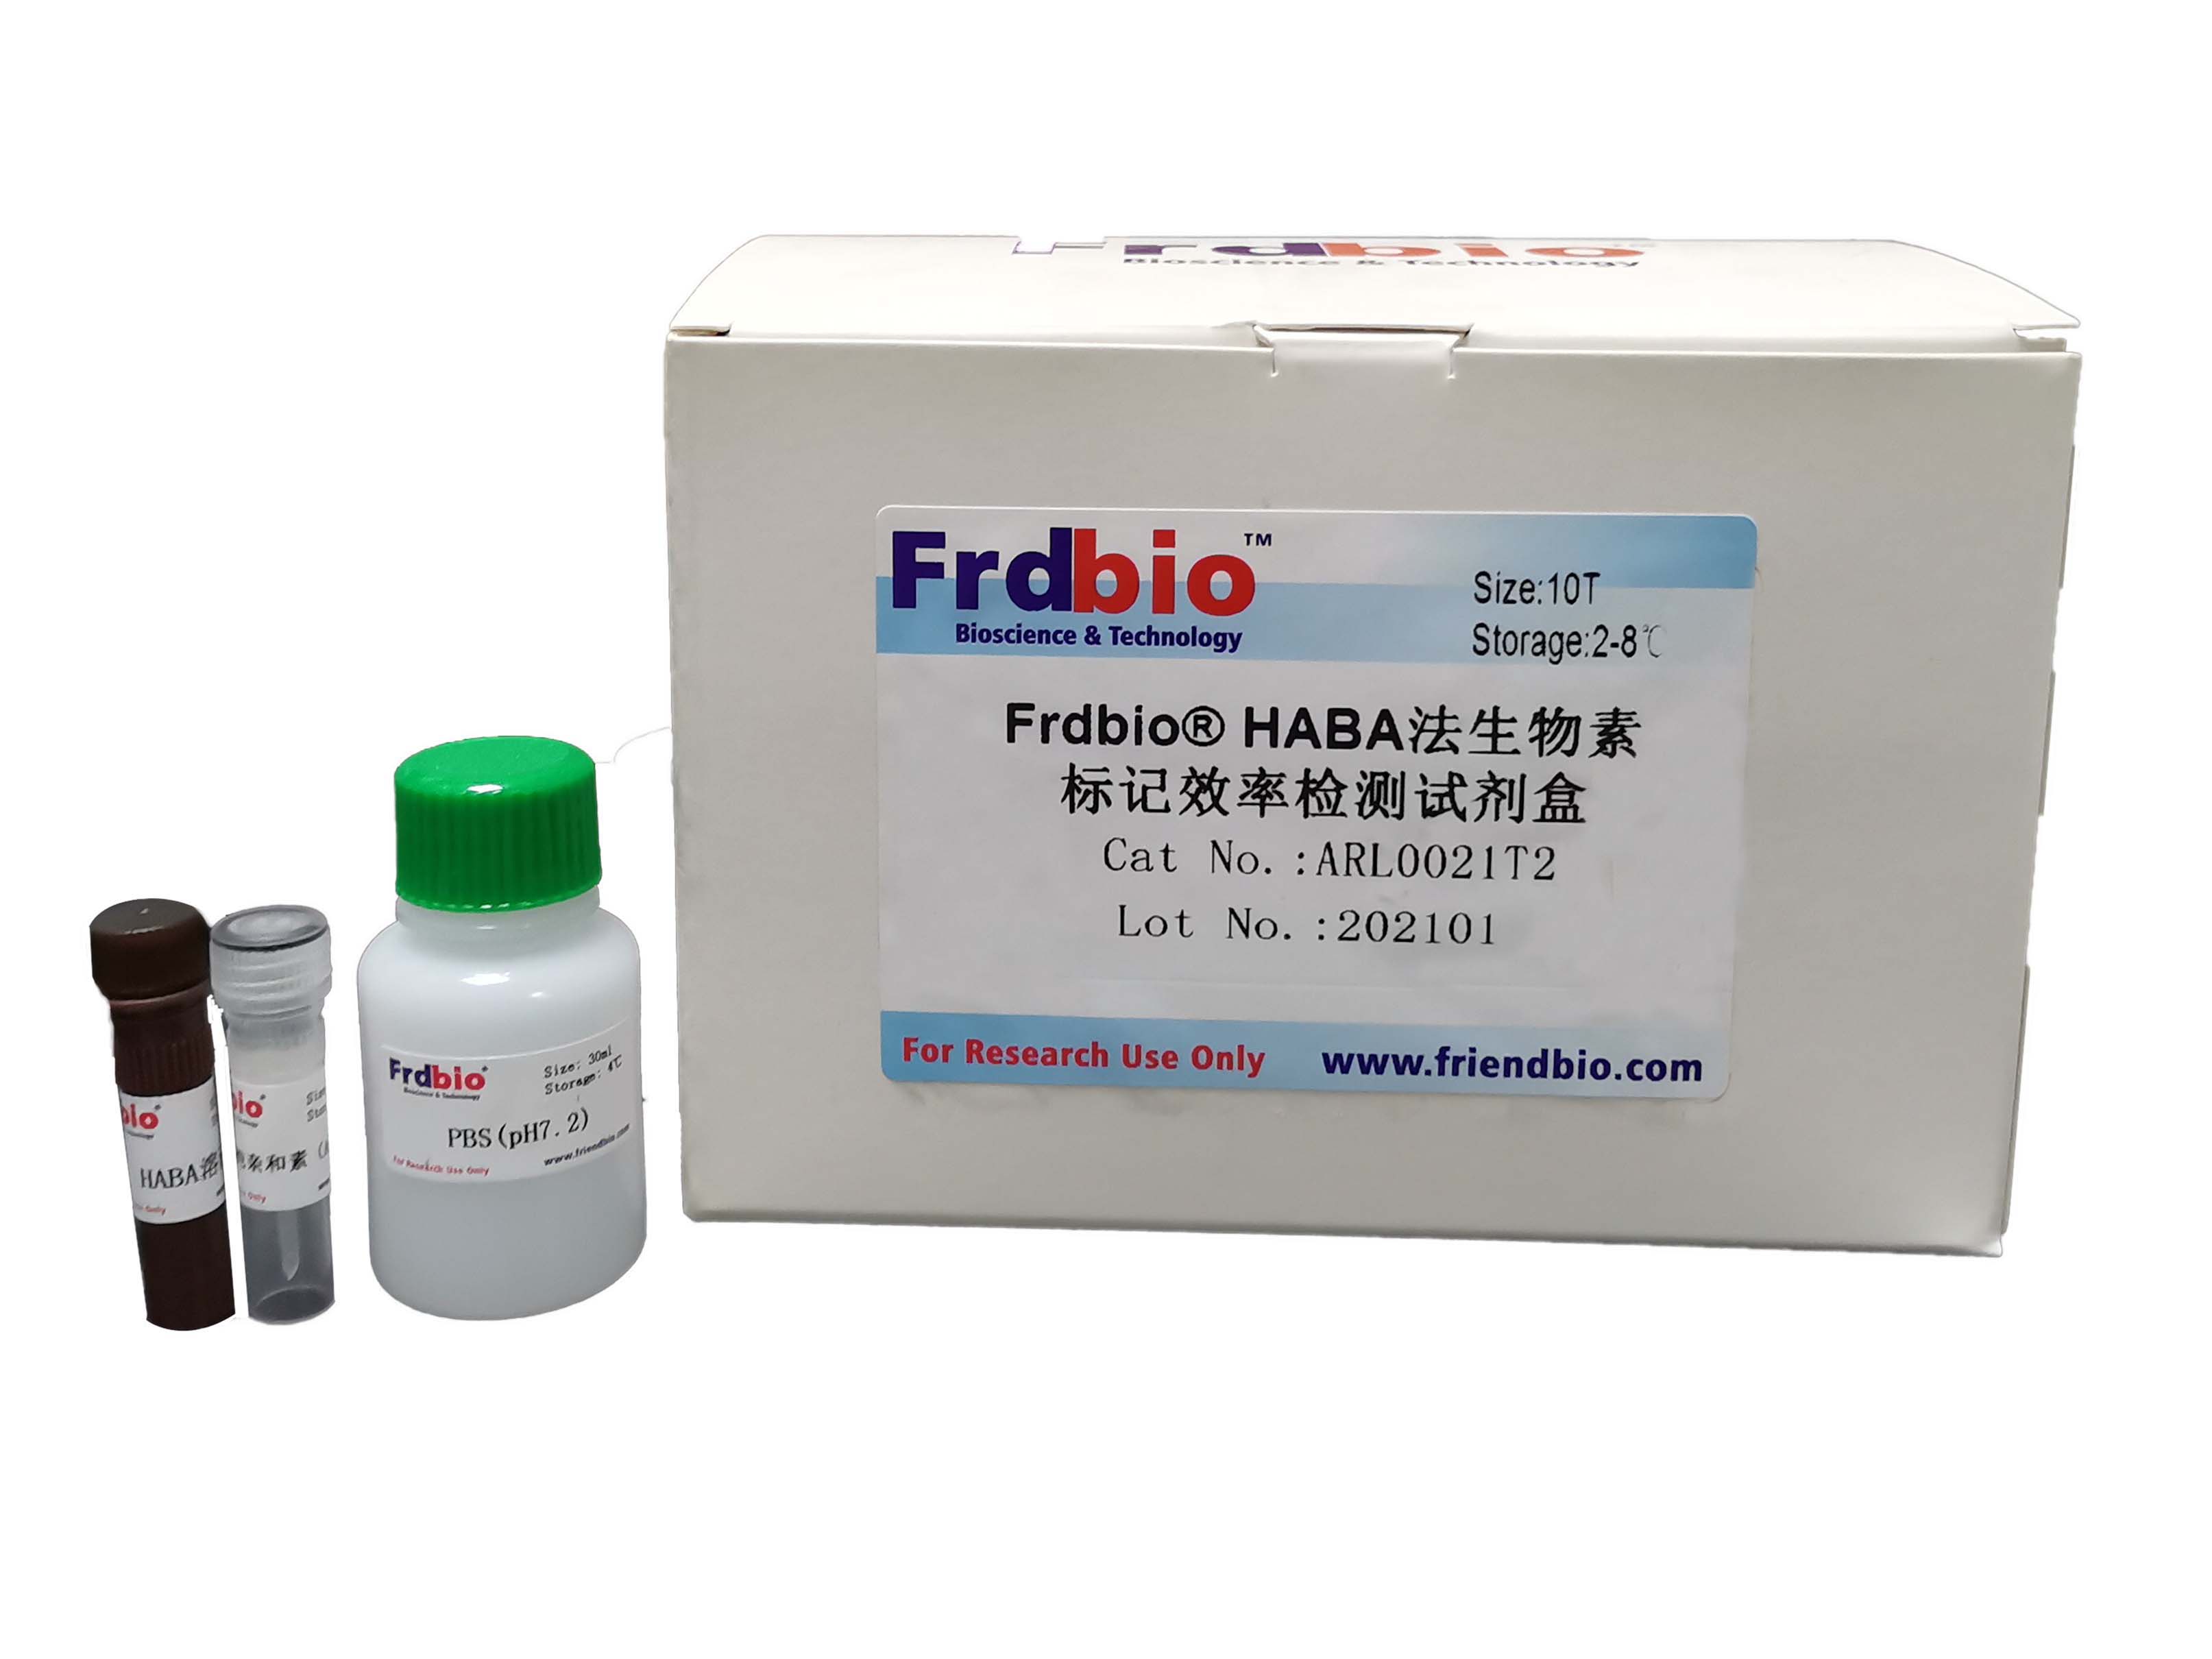 Frdbio® HABA法生物素标记效率检测试剂盒